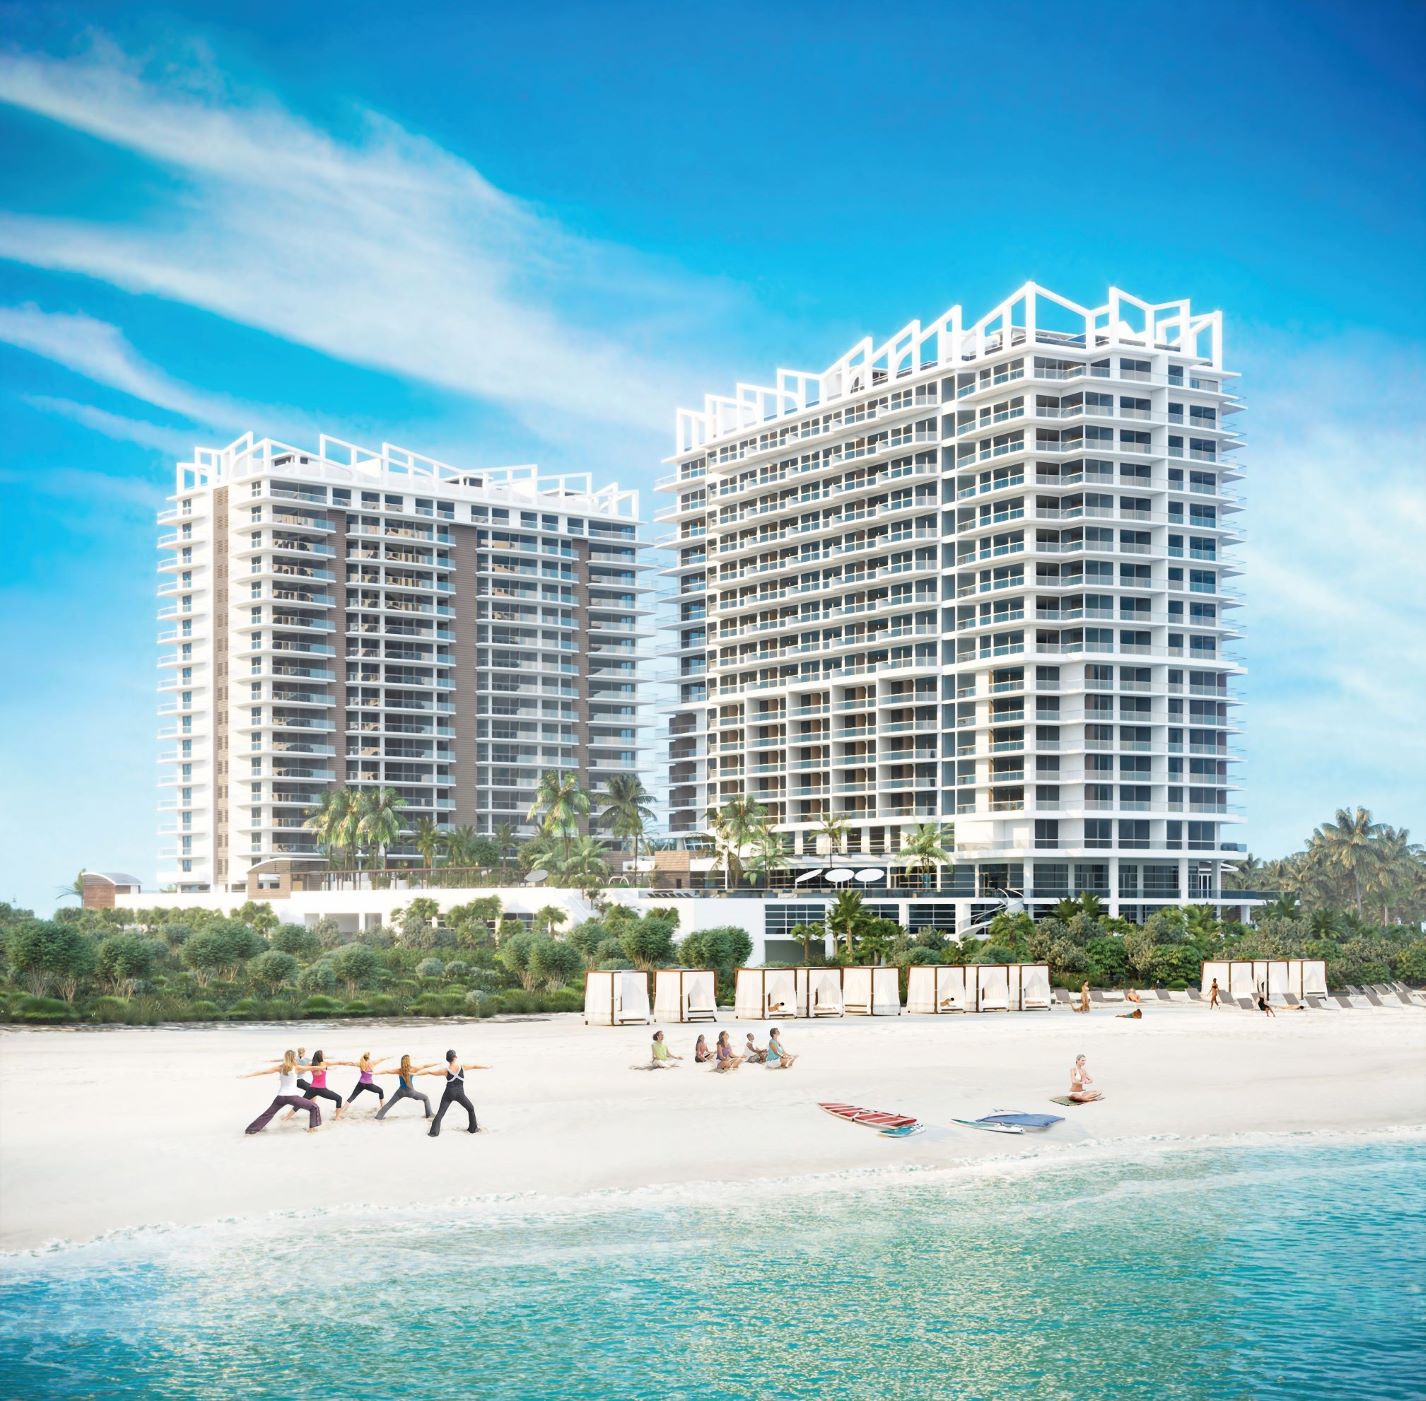 Amrit Ocean Resort & Residences - Singer Island, The Palm Beaches